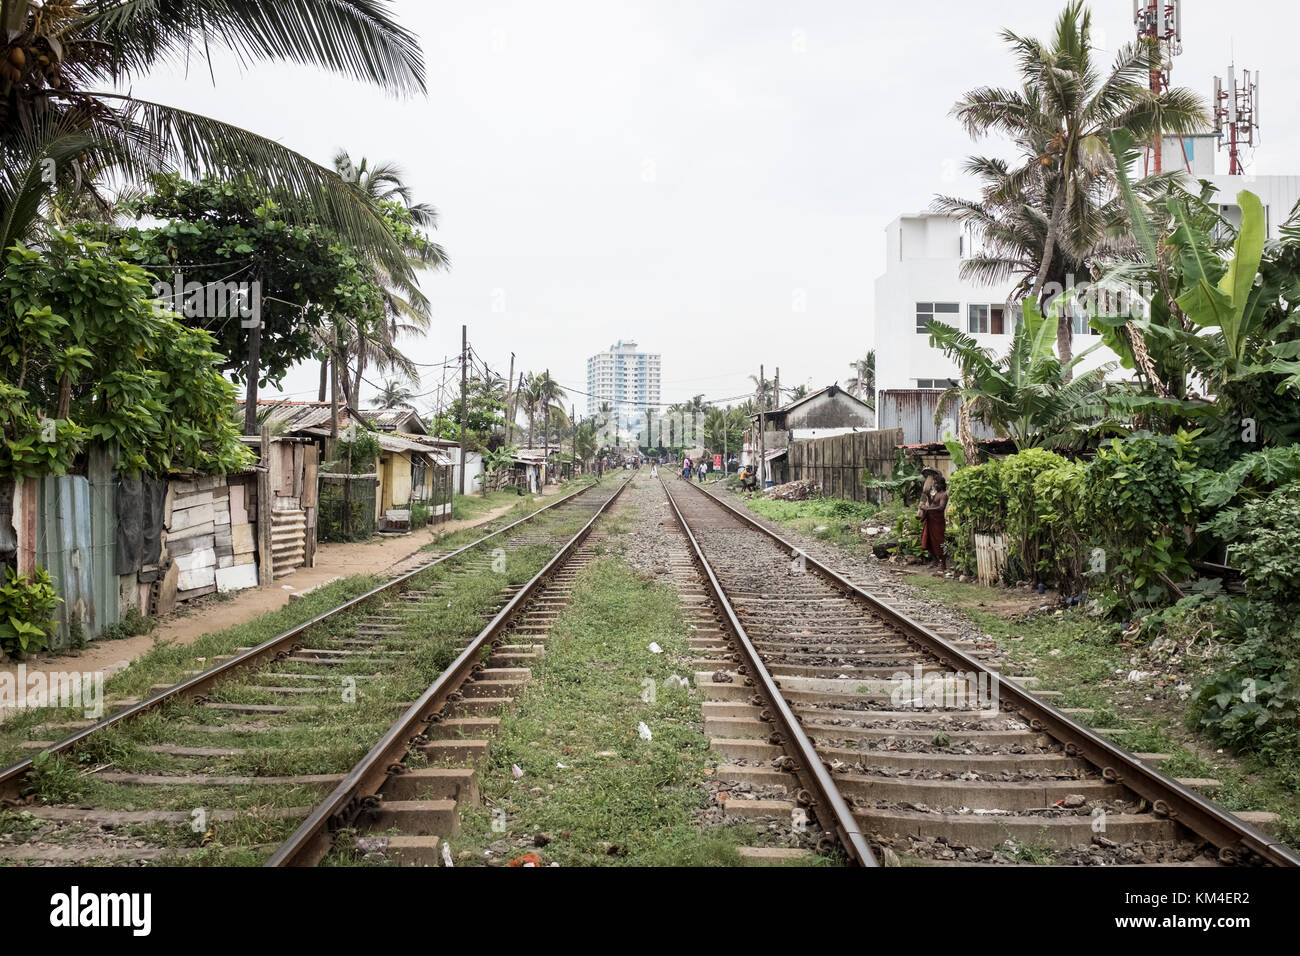 Railway tracks run through a shanty town in Colombo, Sri Lanka Stock Photo